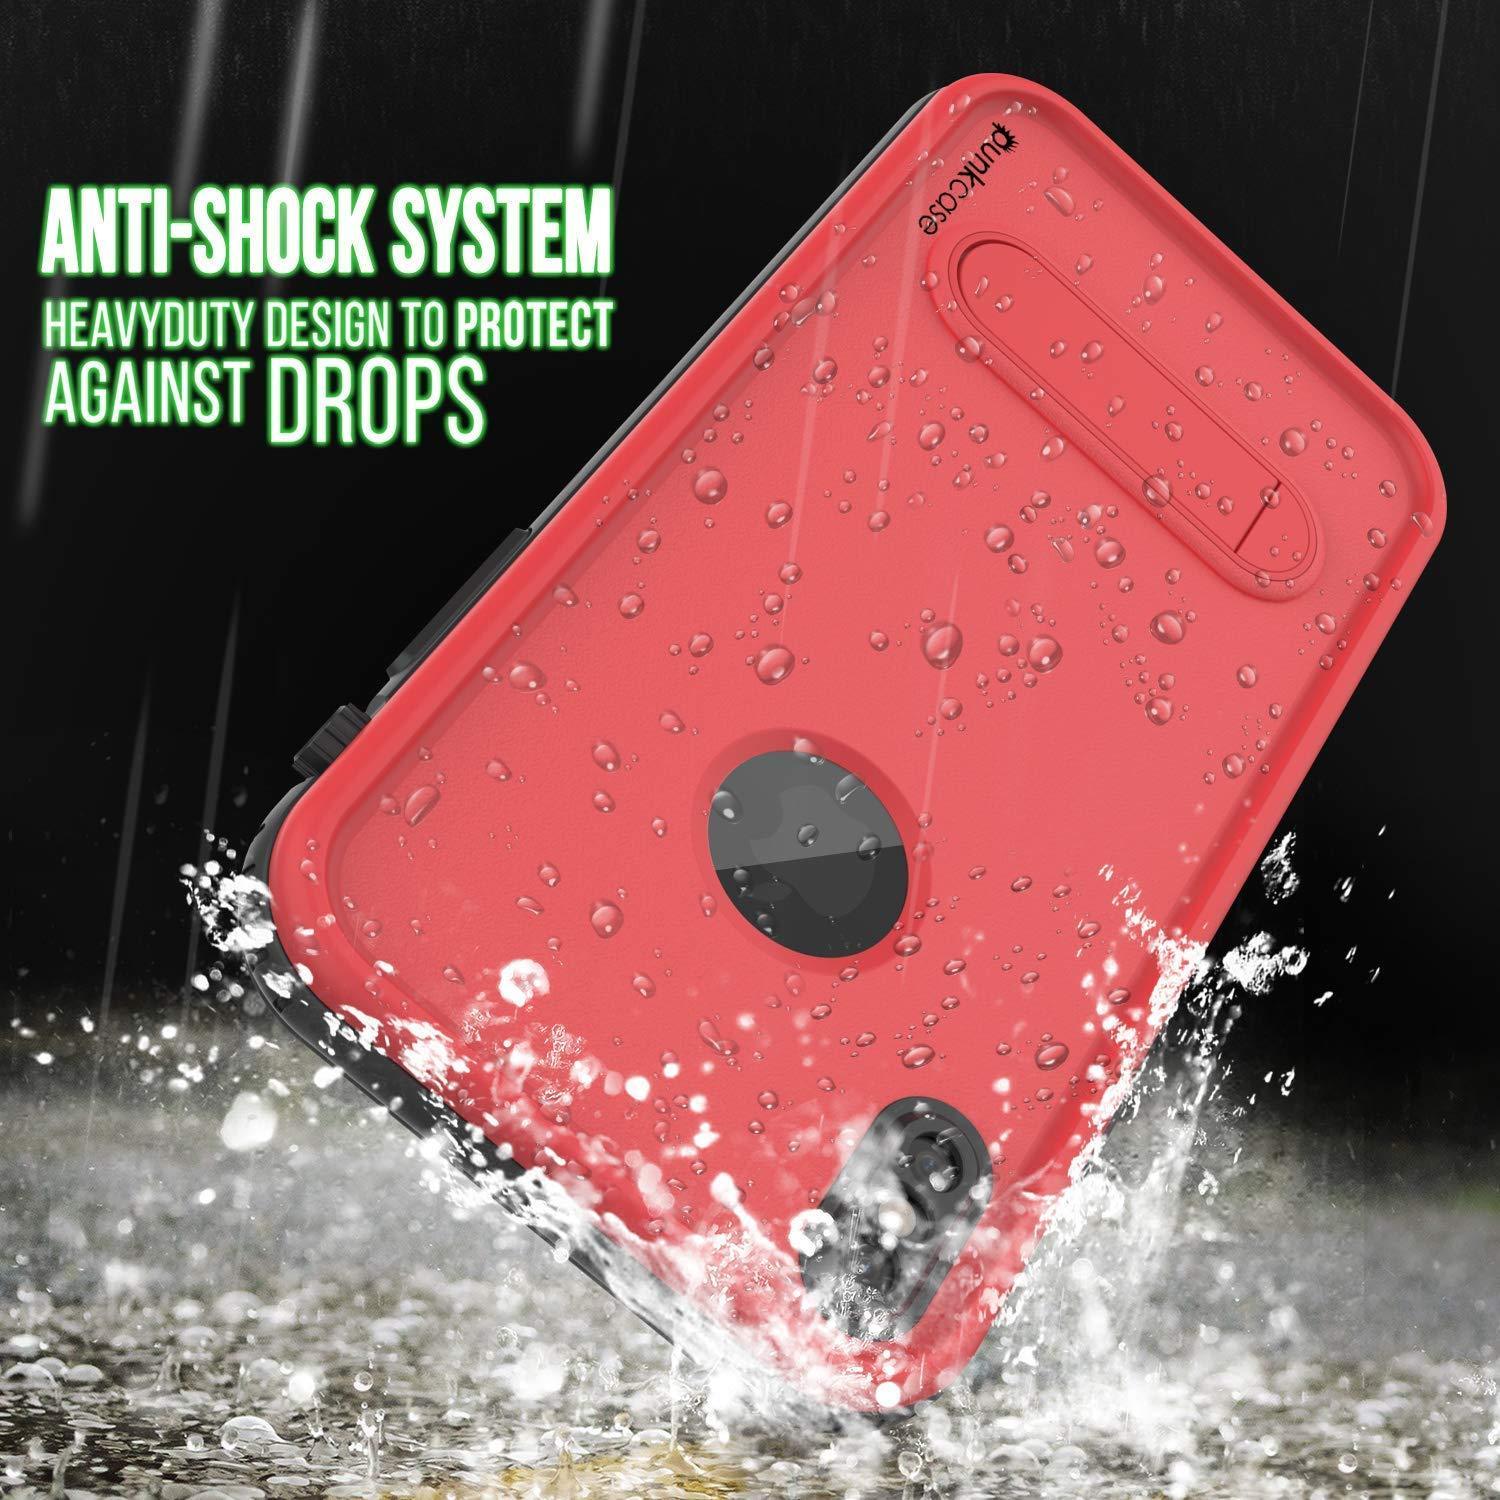 iPhone XR Waterproof Case, Punkcase [KickStud Series] Armor Cover [Red]